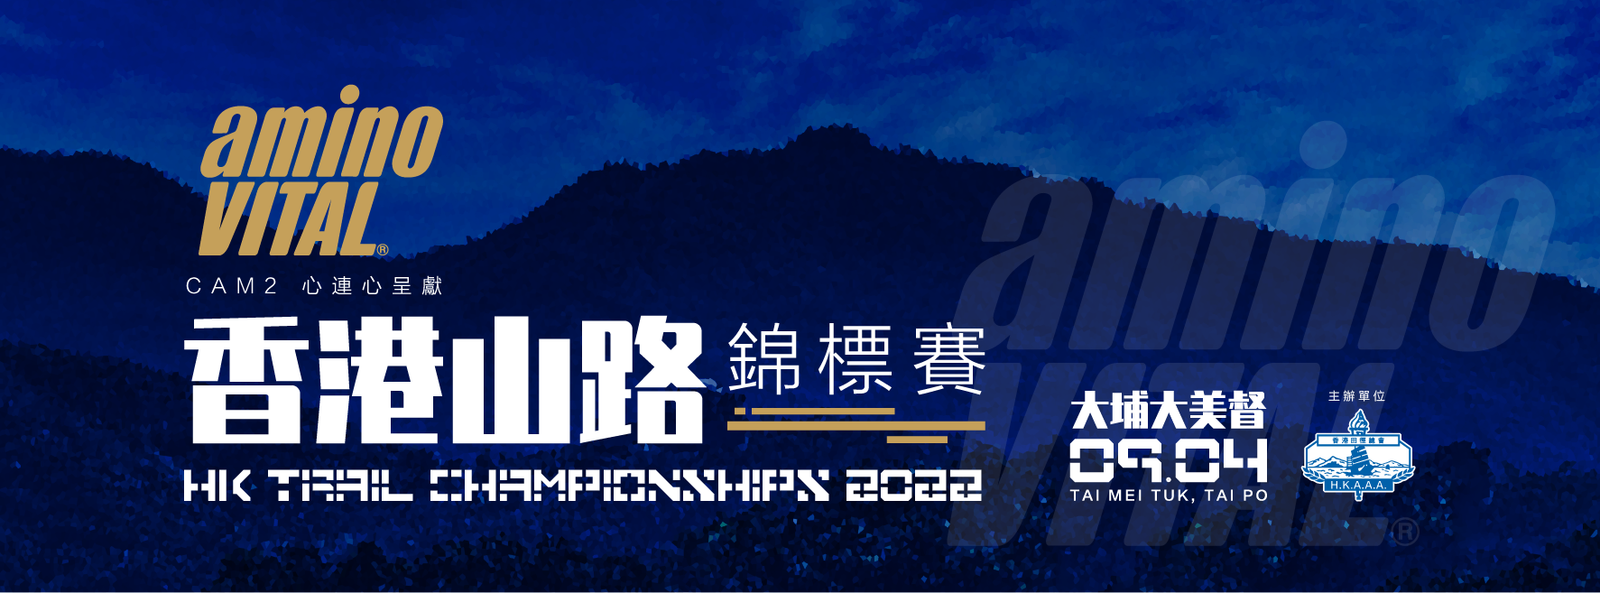 aminoVital Cam2 心連心呈獻 香港山路錦標賽2022(二) 短距離路線初探